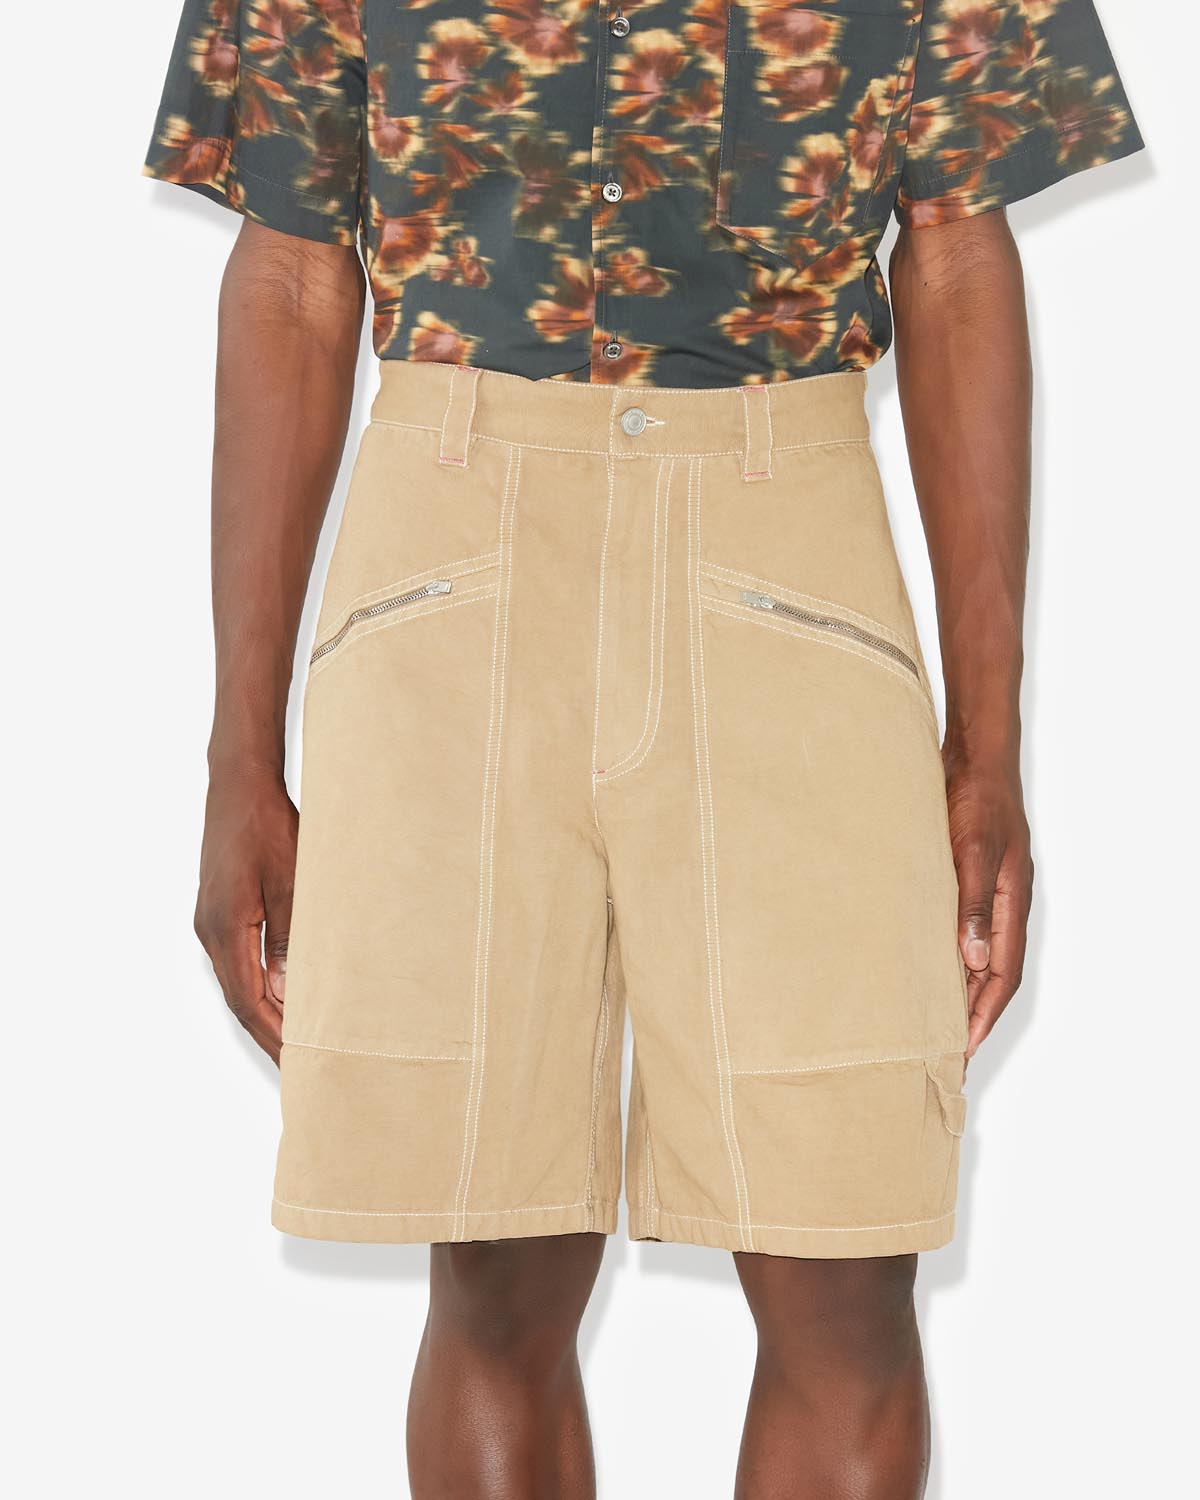 Feoni shorts Man Sahara 5